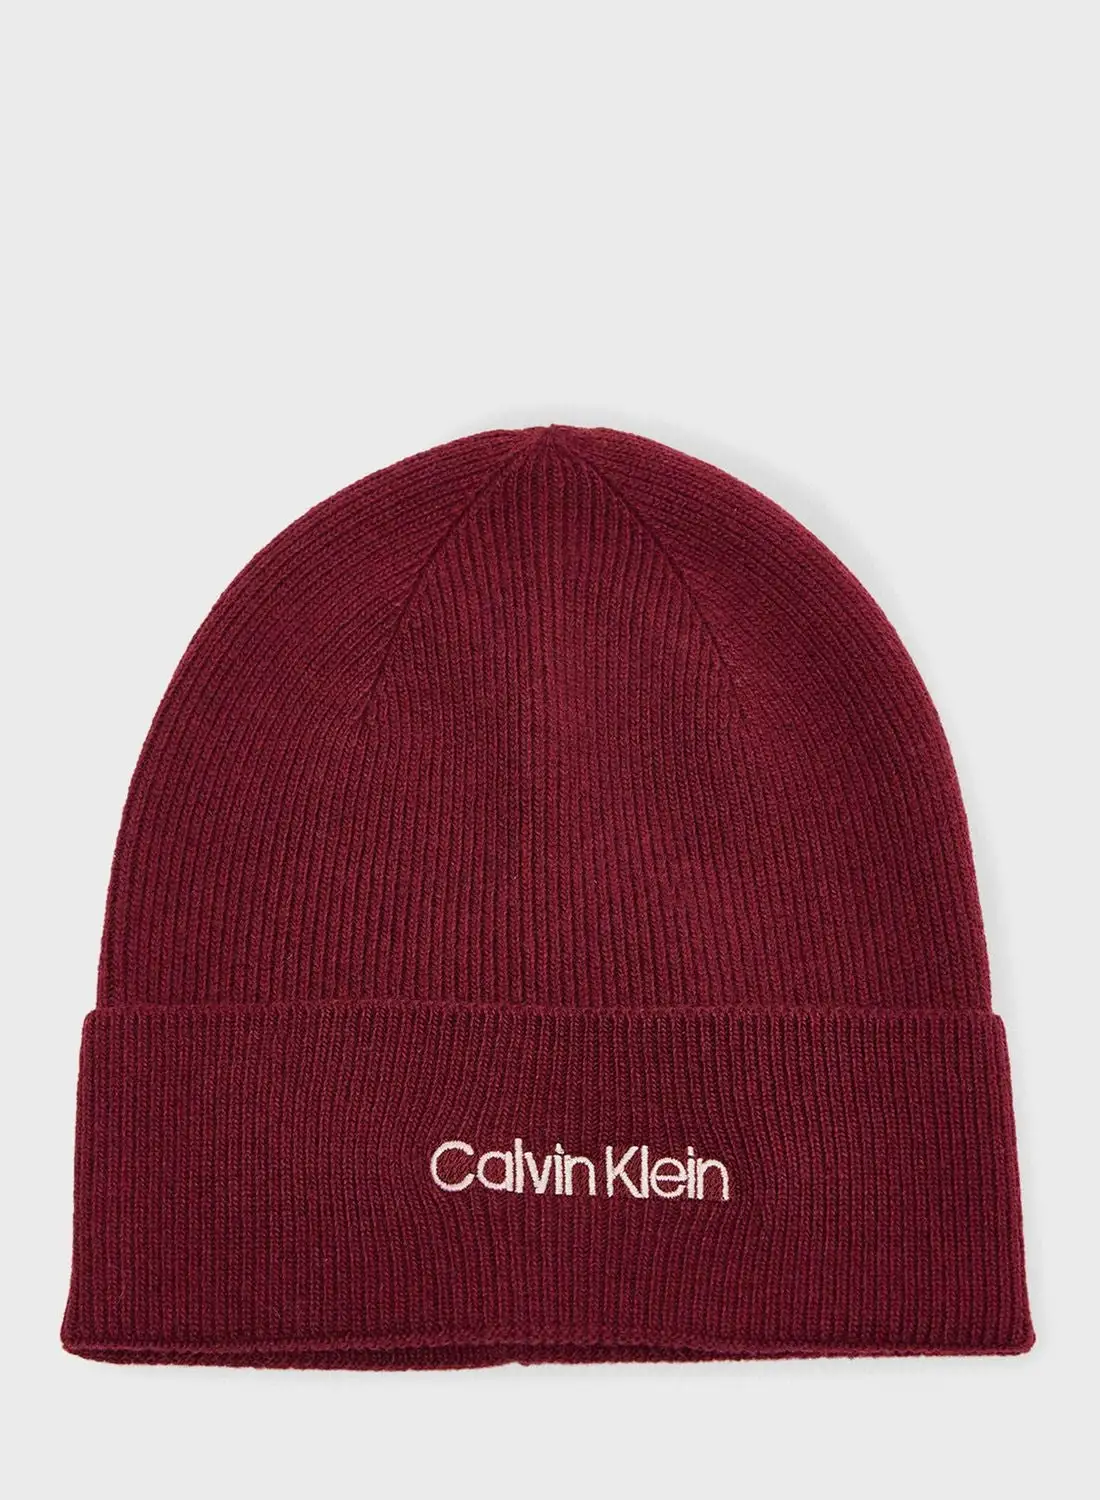 CALVIN KLEIN Essential Knit Beanie